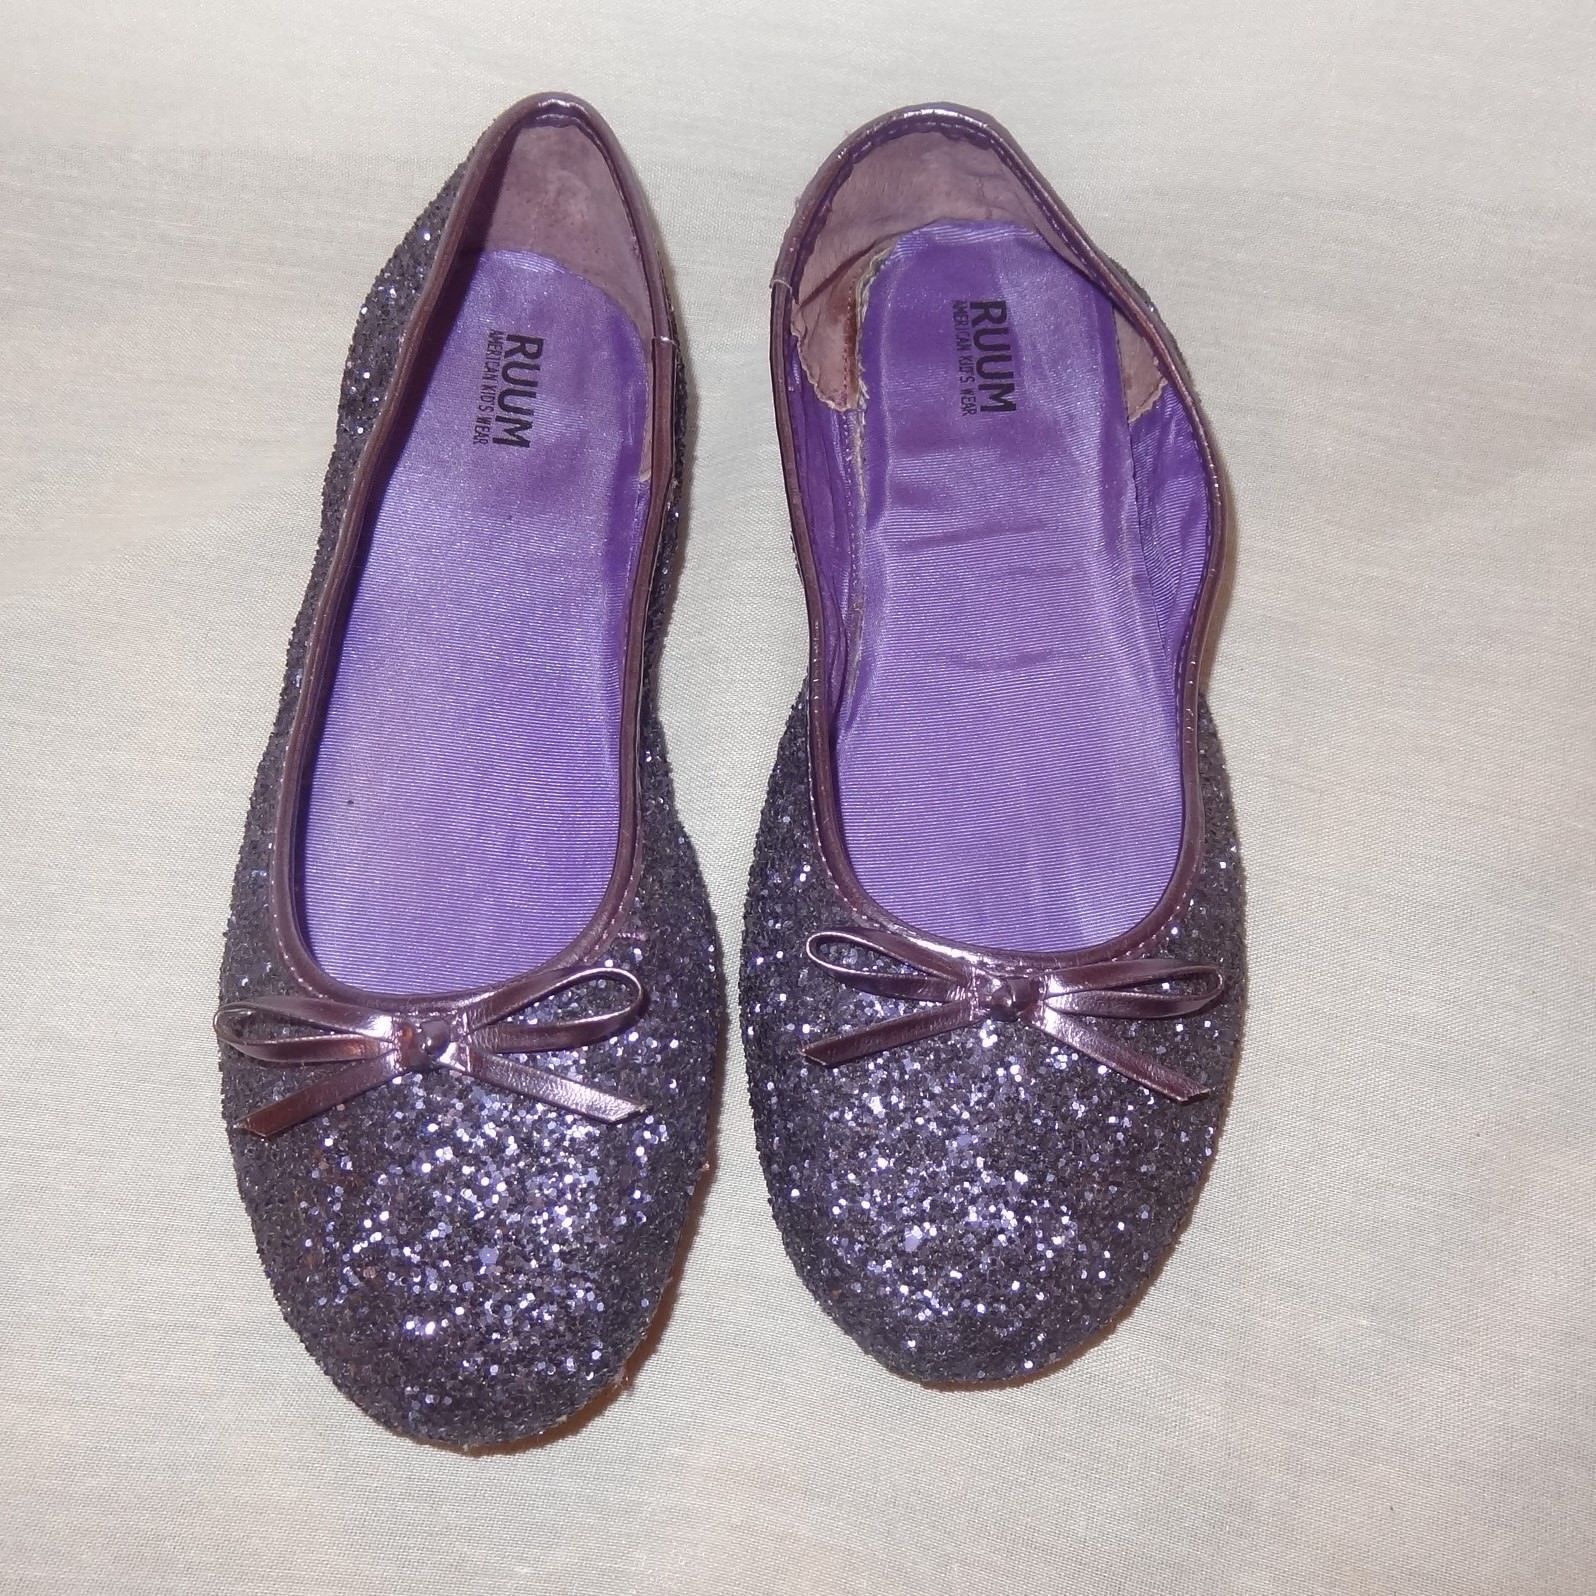 Primary image for Ruum Purple Glitter Shoes Size 4 Medium Girls Slip On Ballet Flat